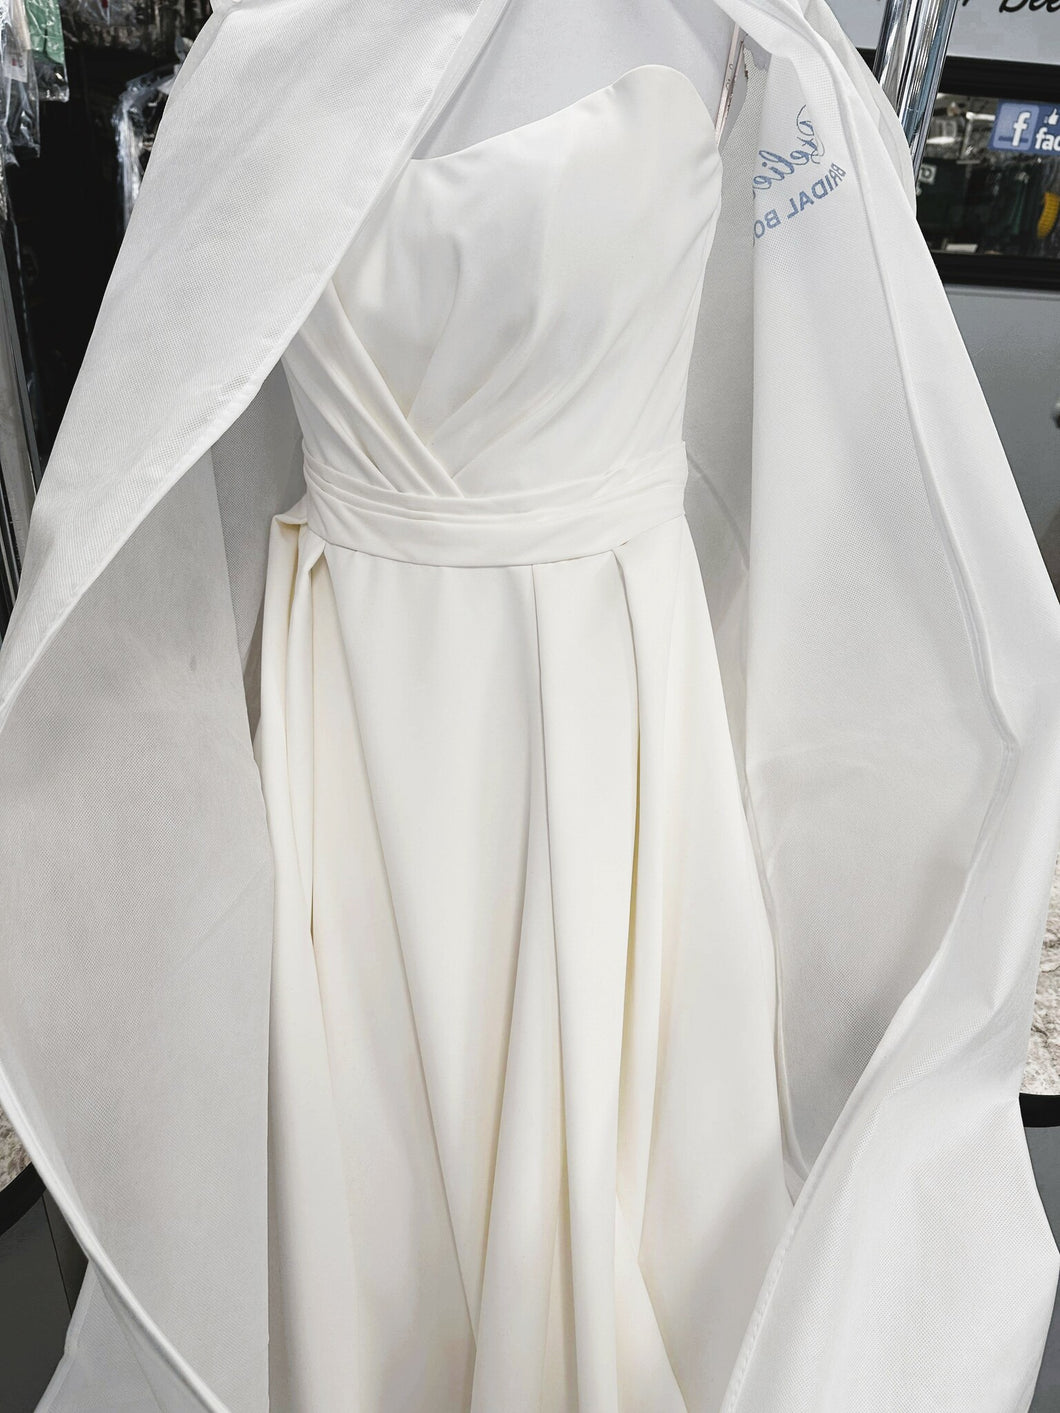 Essense of Australia 'wedding dress Australia' wedding dress size-08 SAMPLE